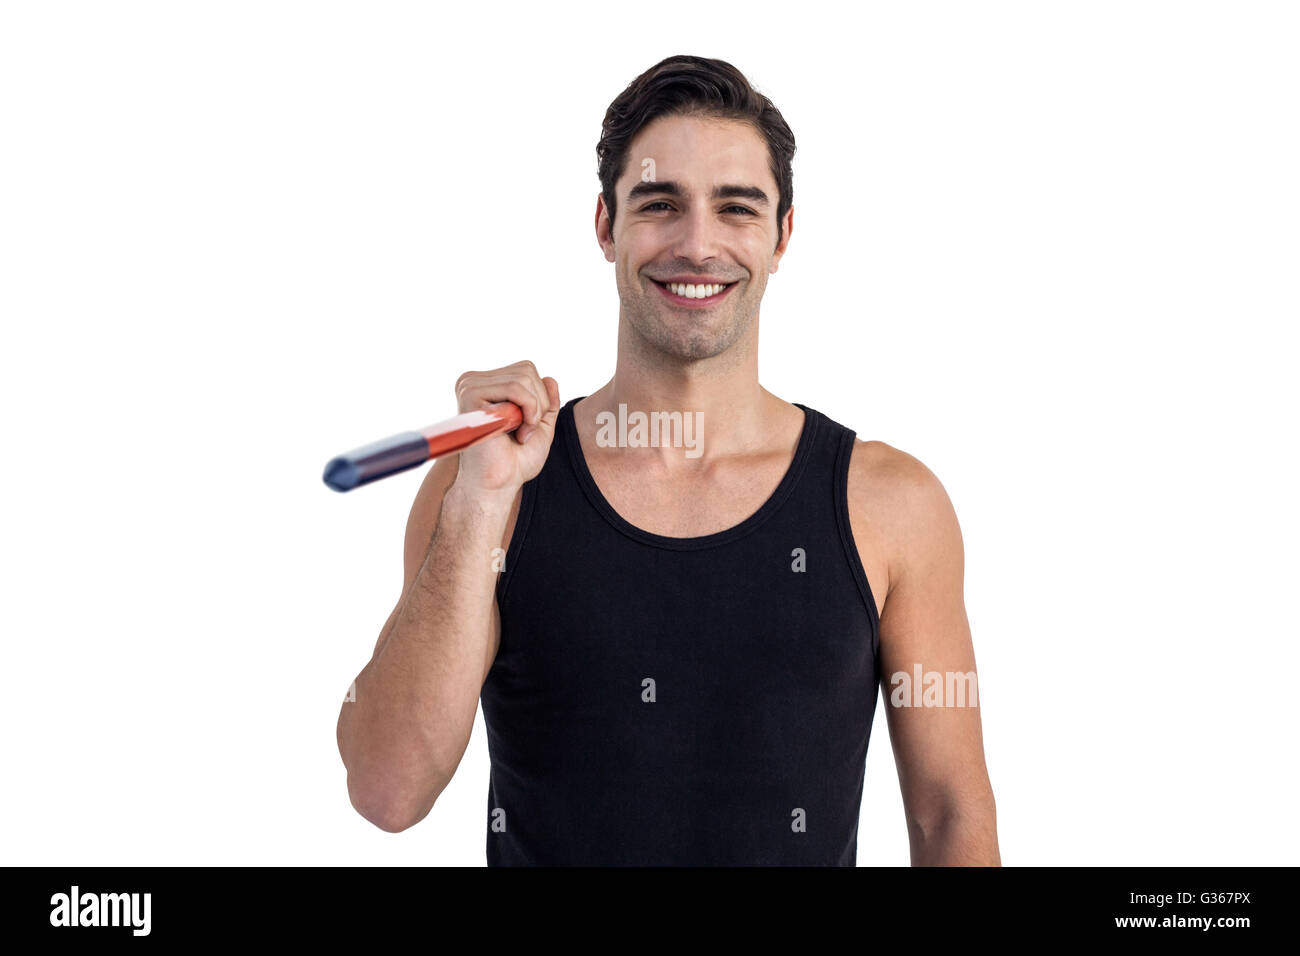 Portrait of happy male athlete holding javelin Stock Photo